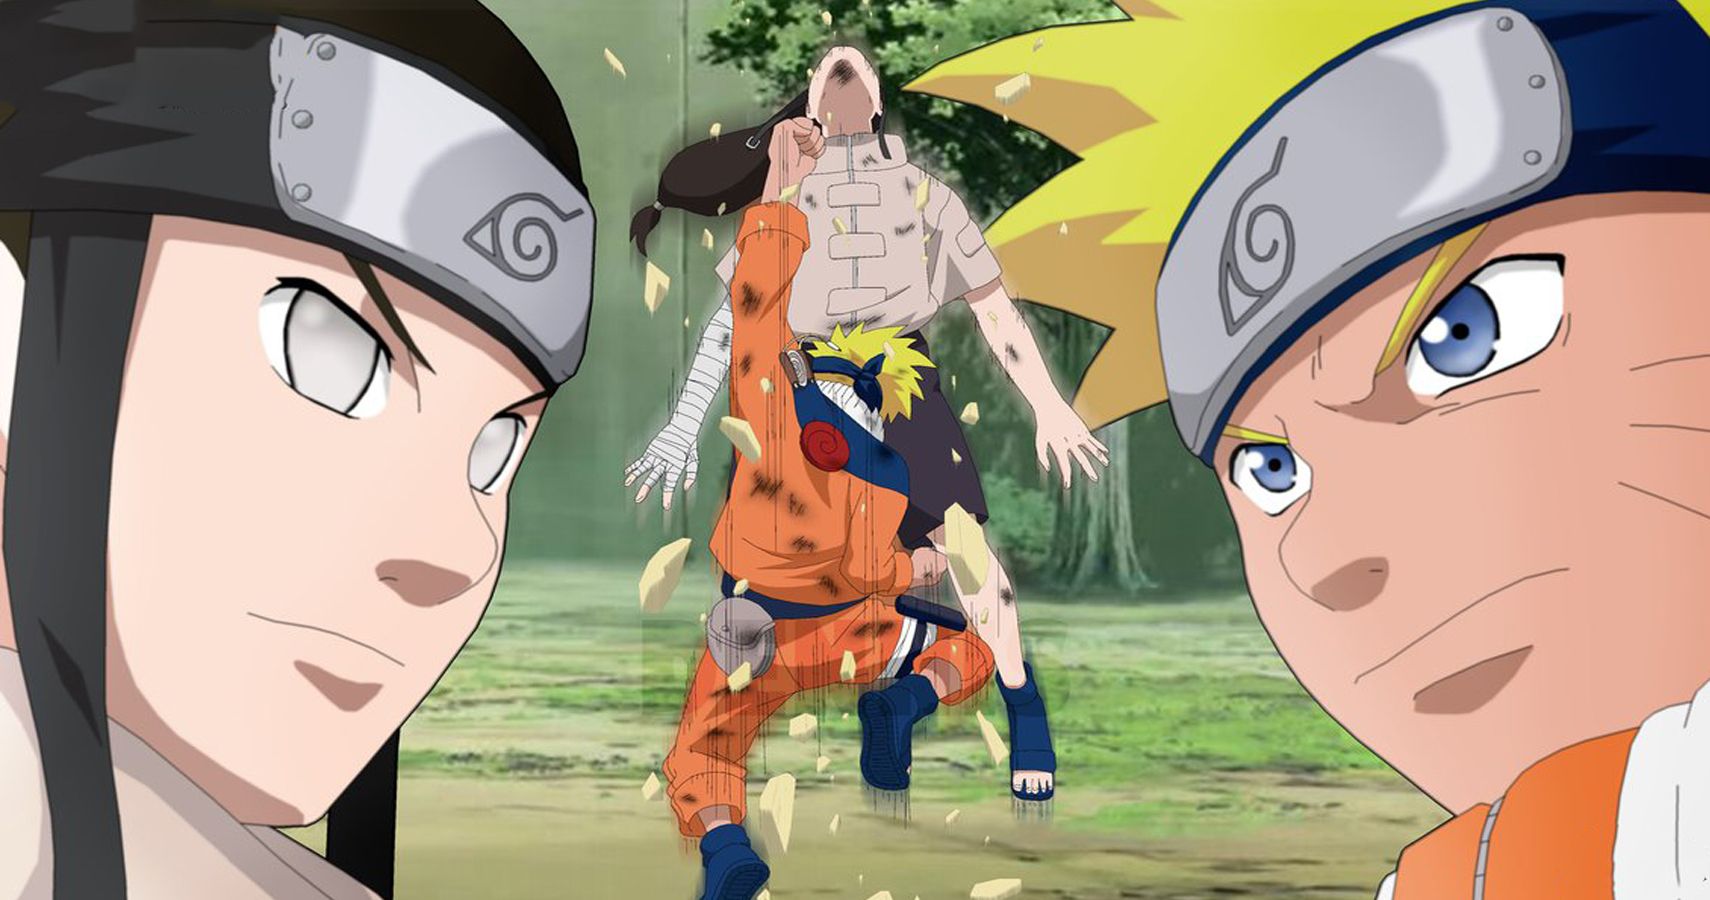 Does Hokage Naruto possess six paths Senjutsu? - Quora